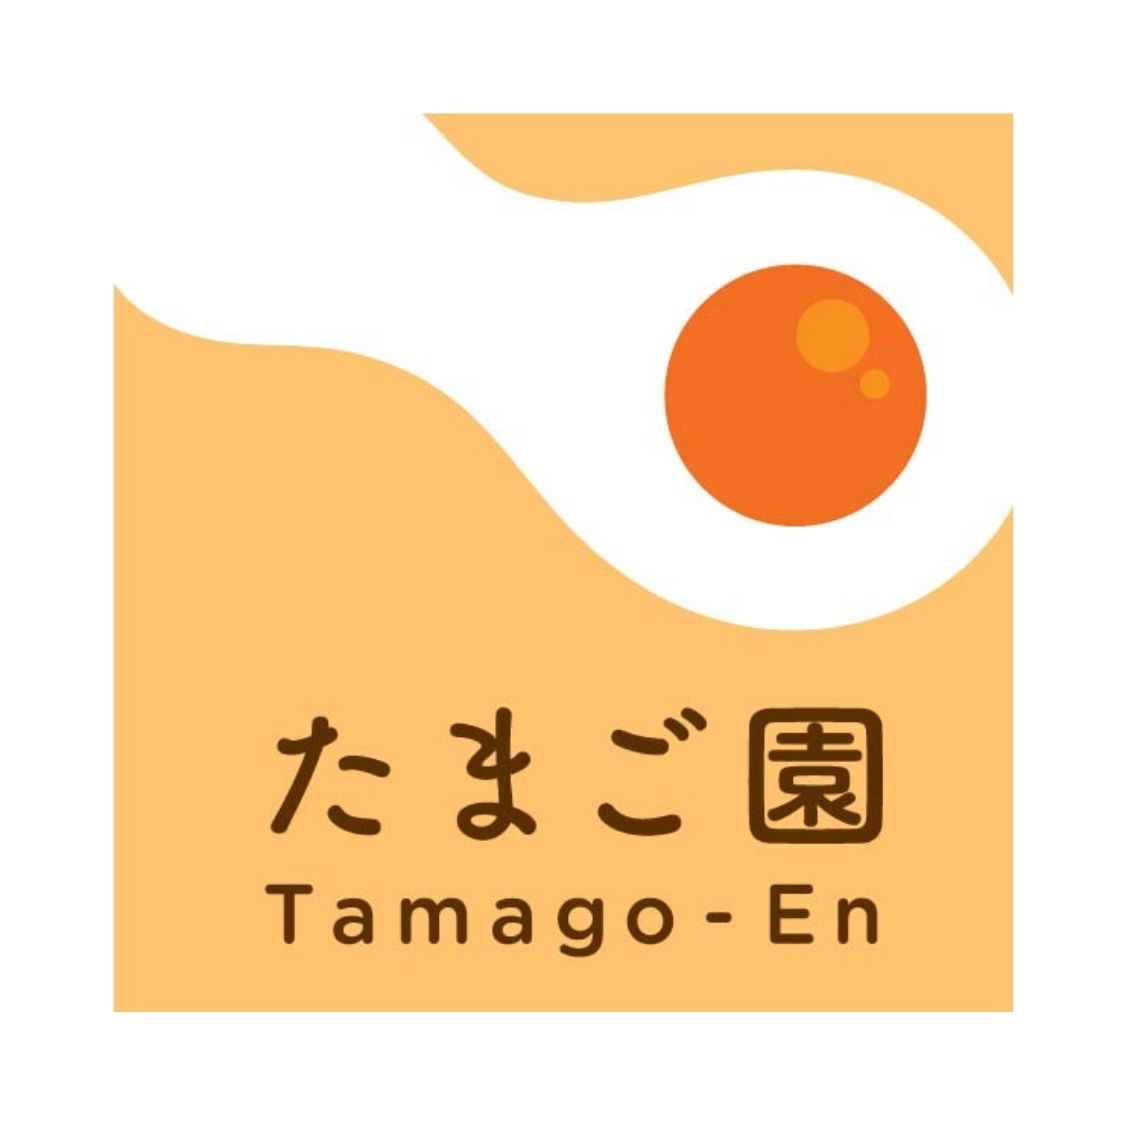 Tamago En Logo.jpg